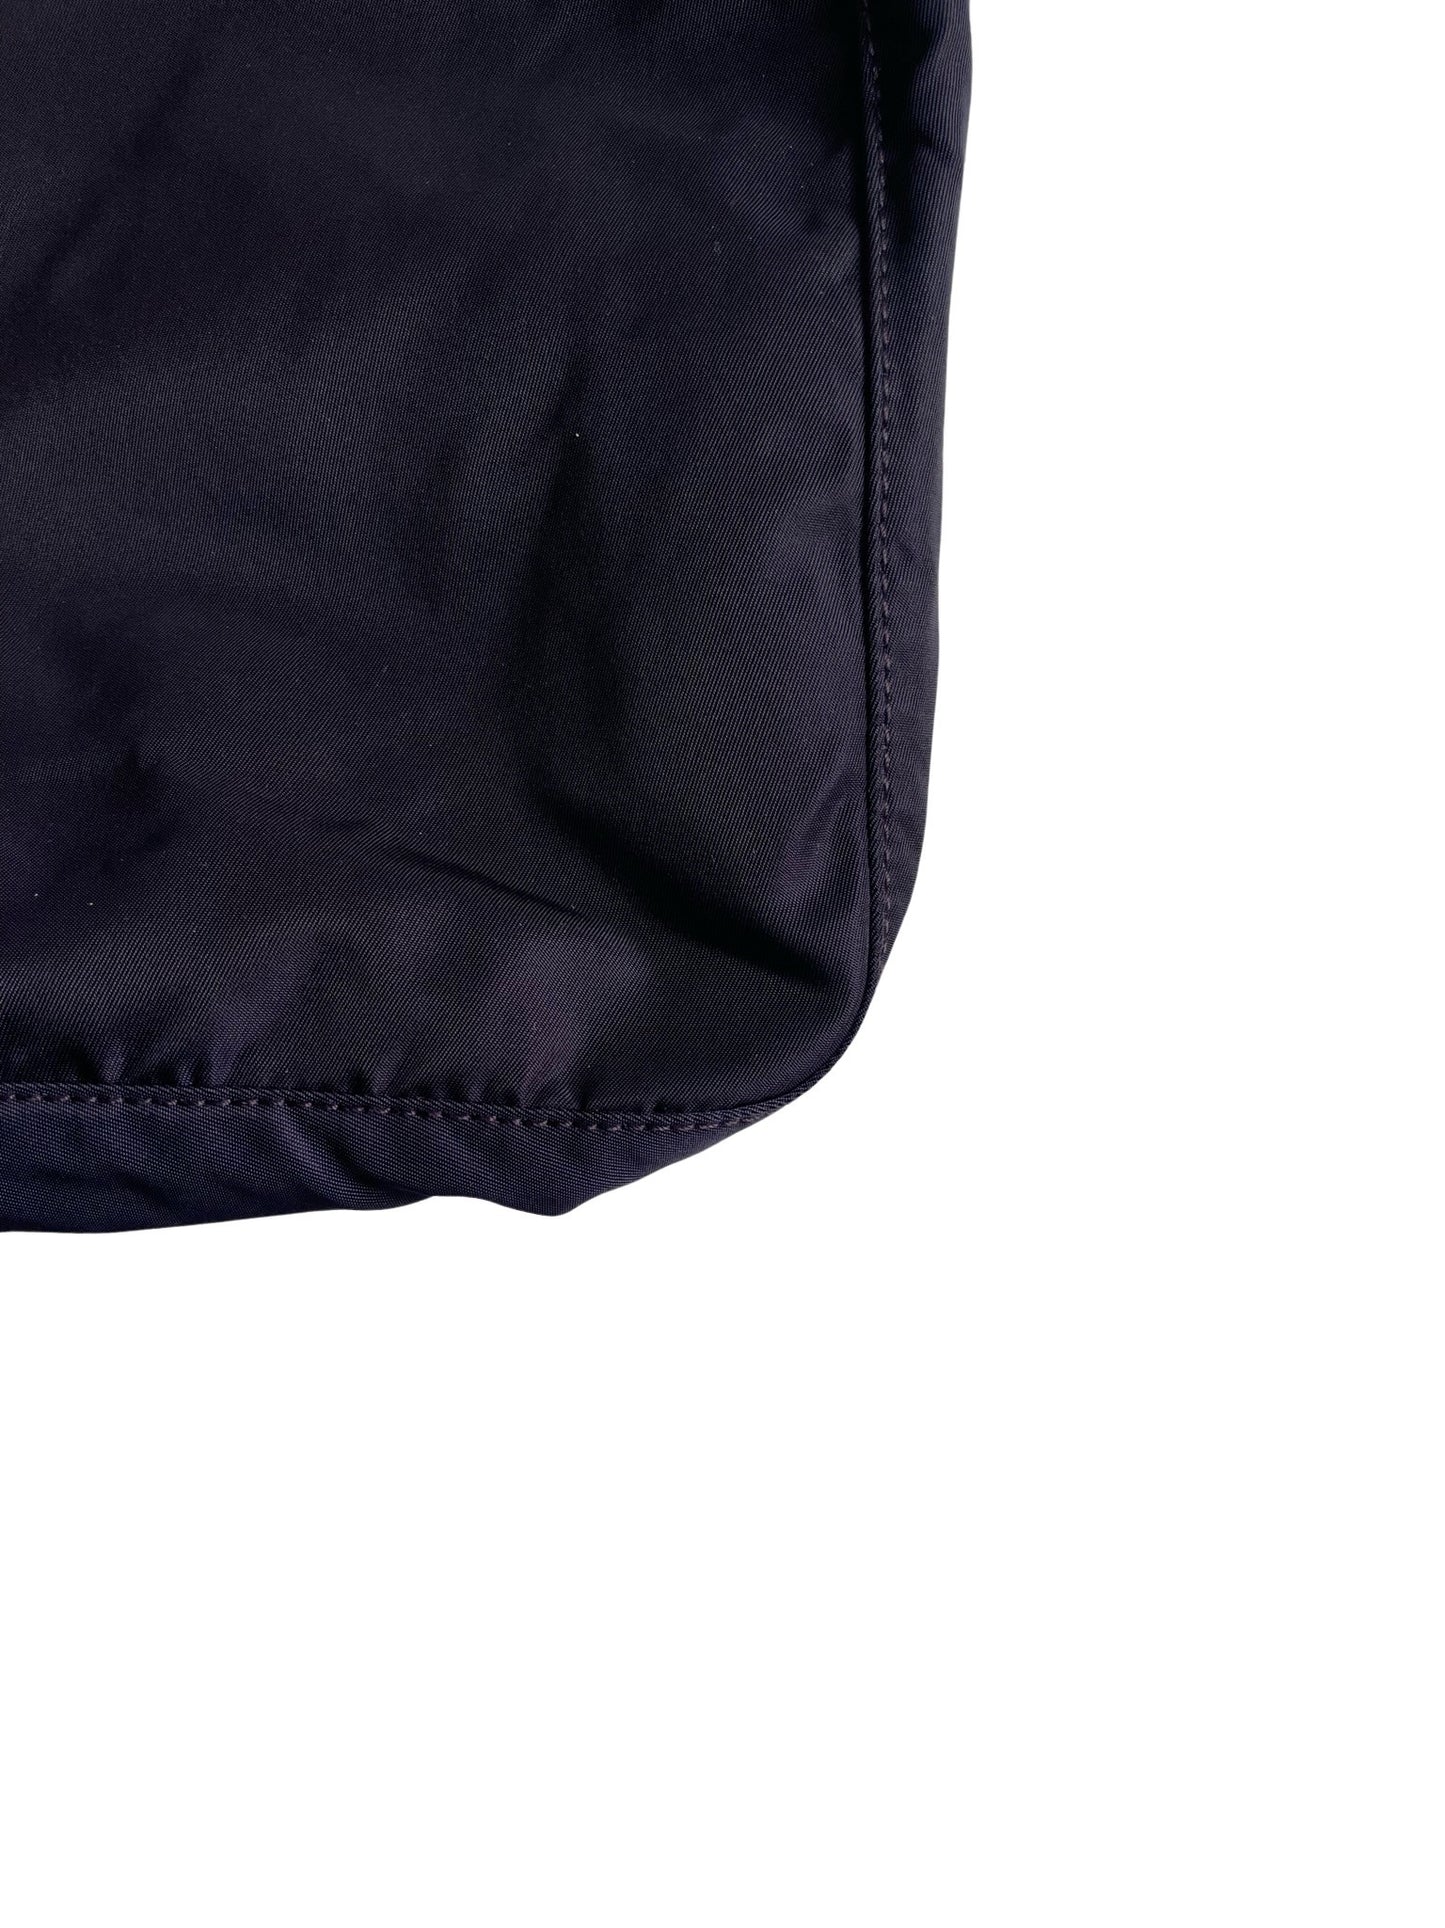 Prada Navy Nylon and Leather Crossbody bag